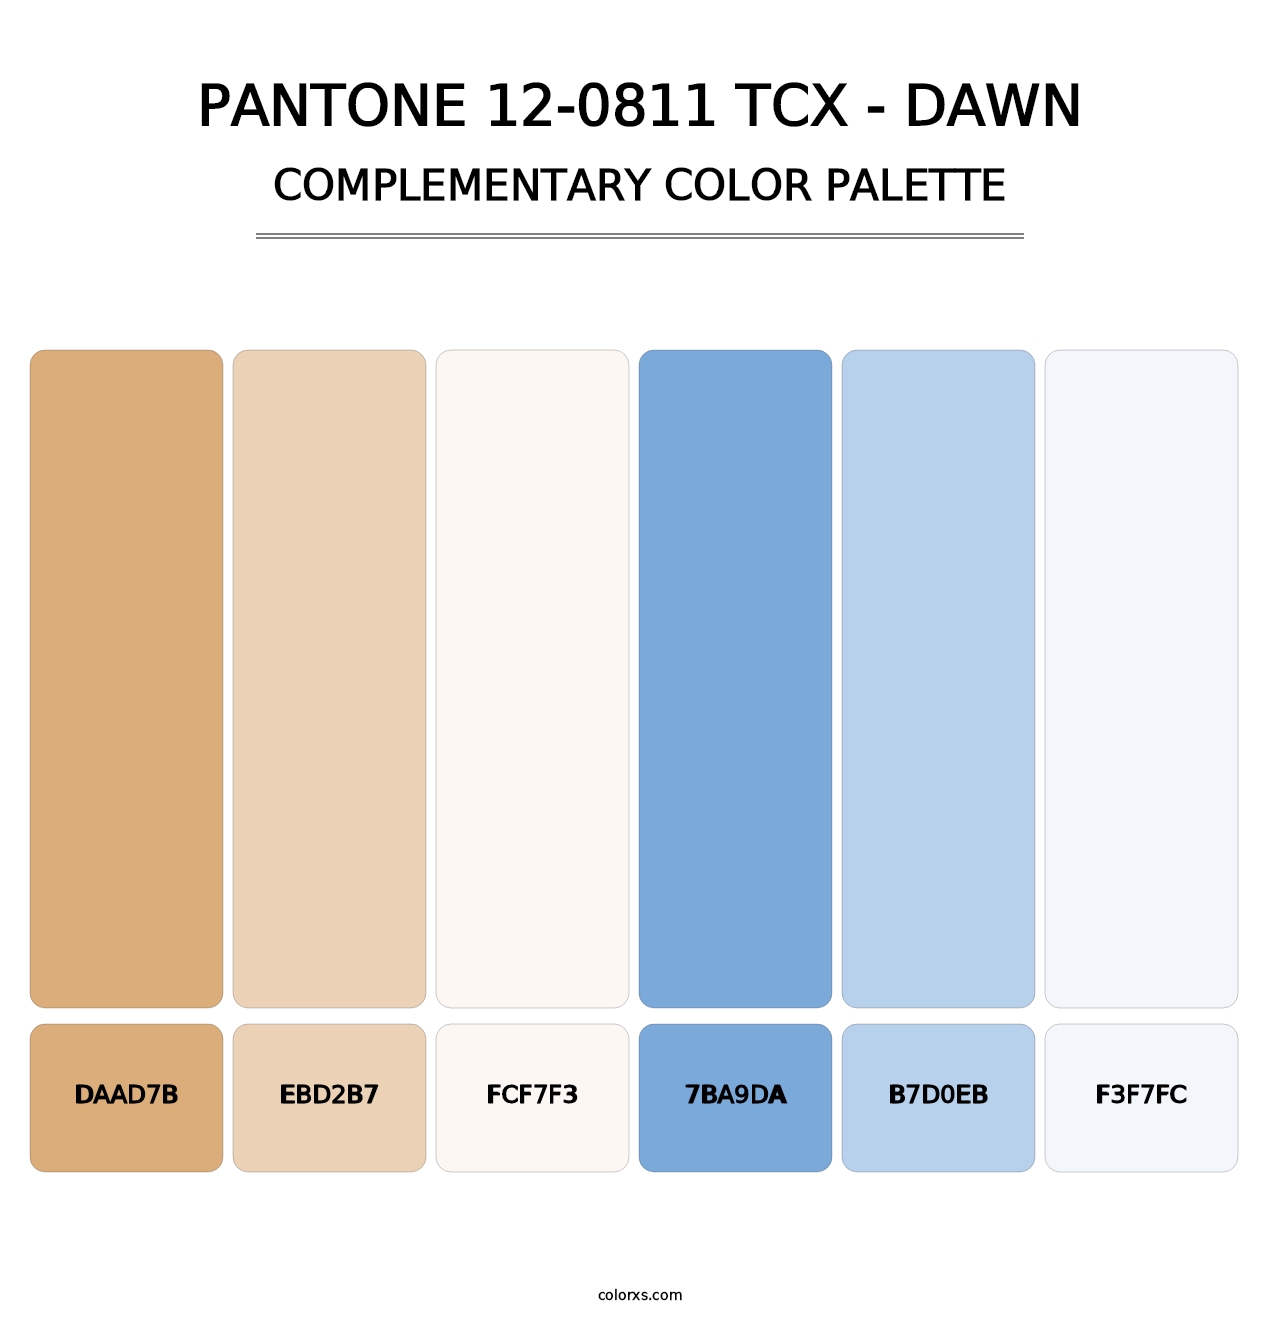 PANTONE 12-0811 TCX - Dawn - Complementary Color Palette